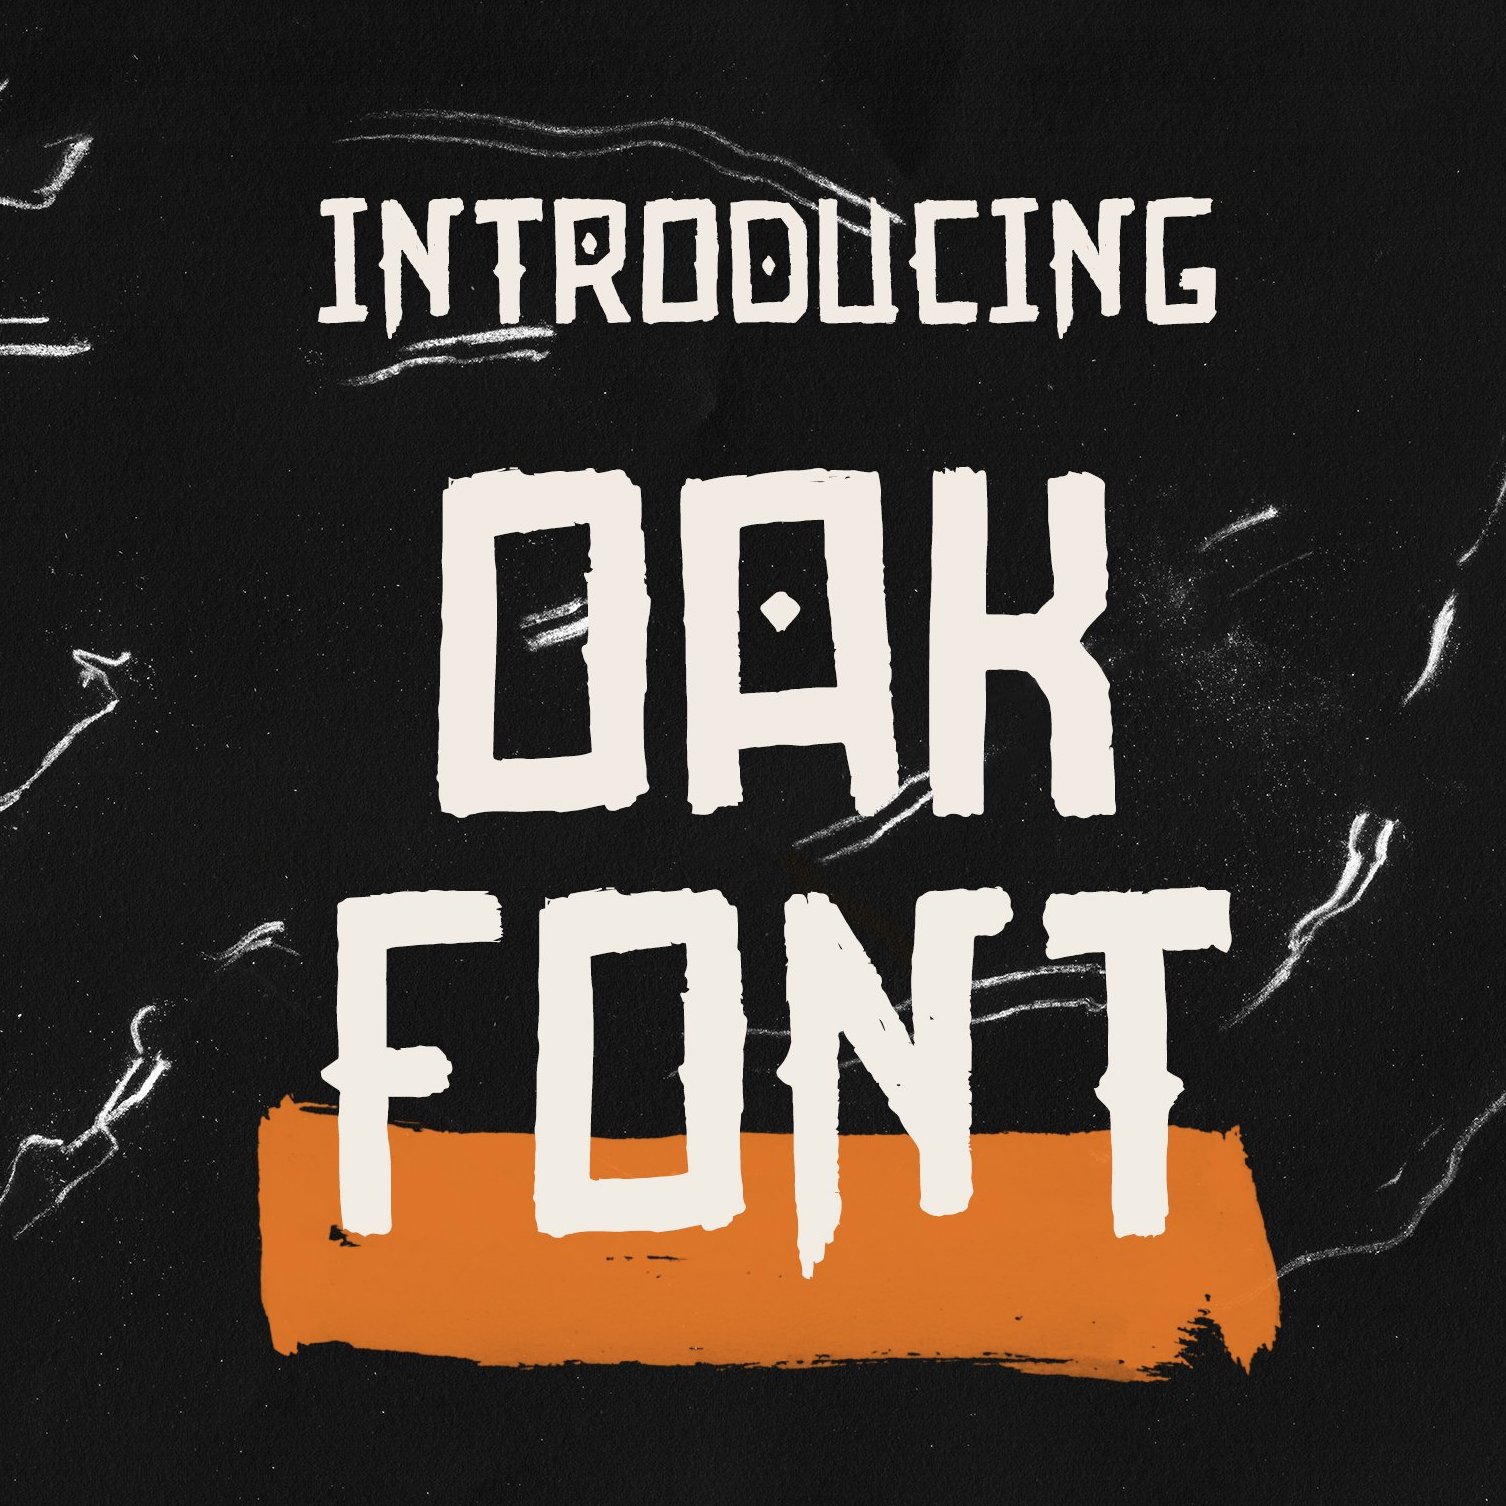 oak font cover image.